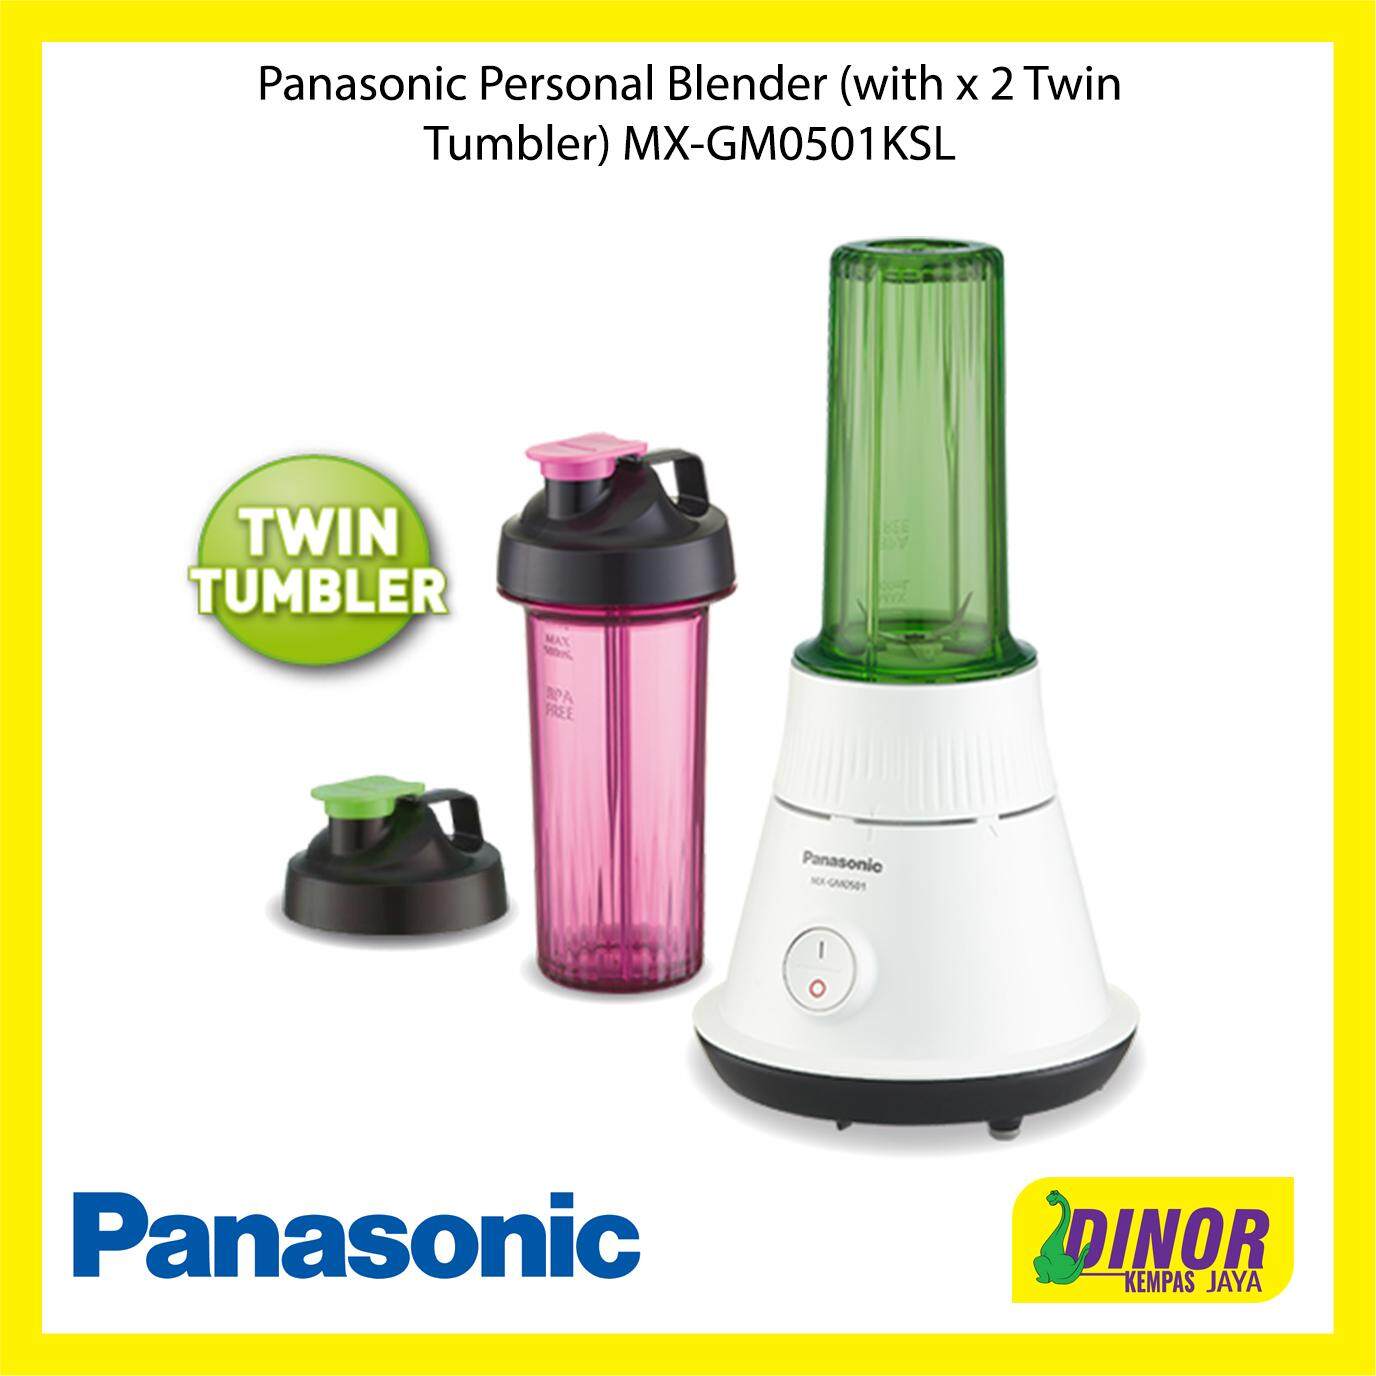 Panasonic Personal Blender (with x 2 Twin Tumbler) MX-GM0501KSL